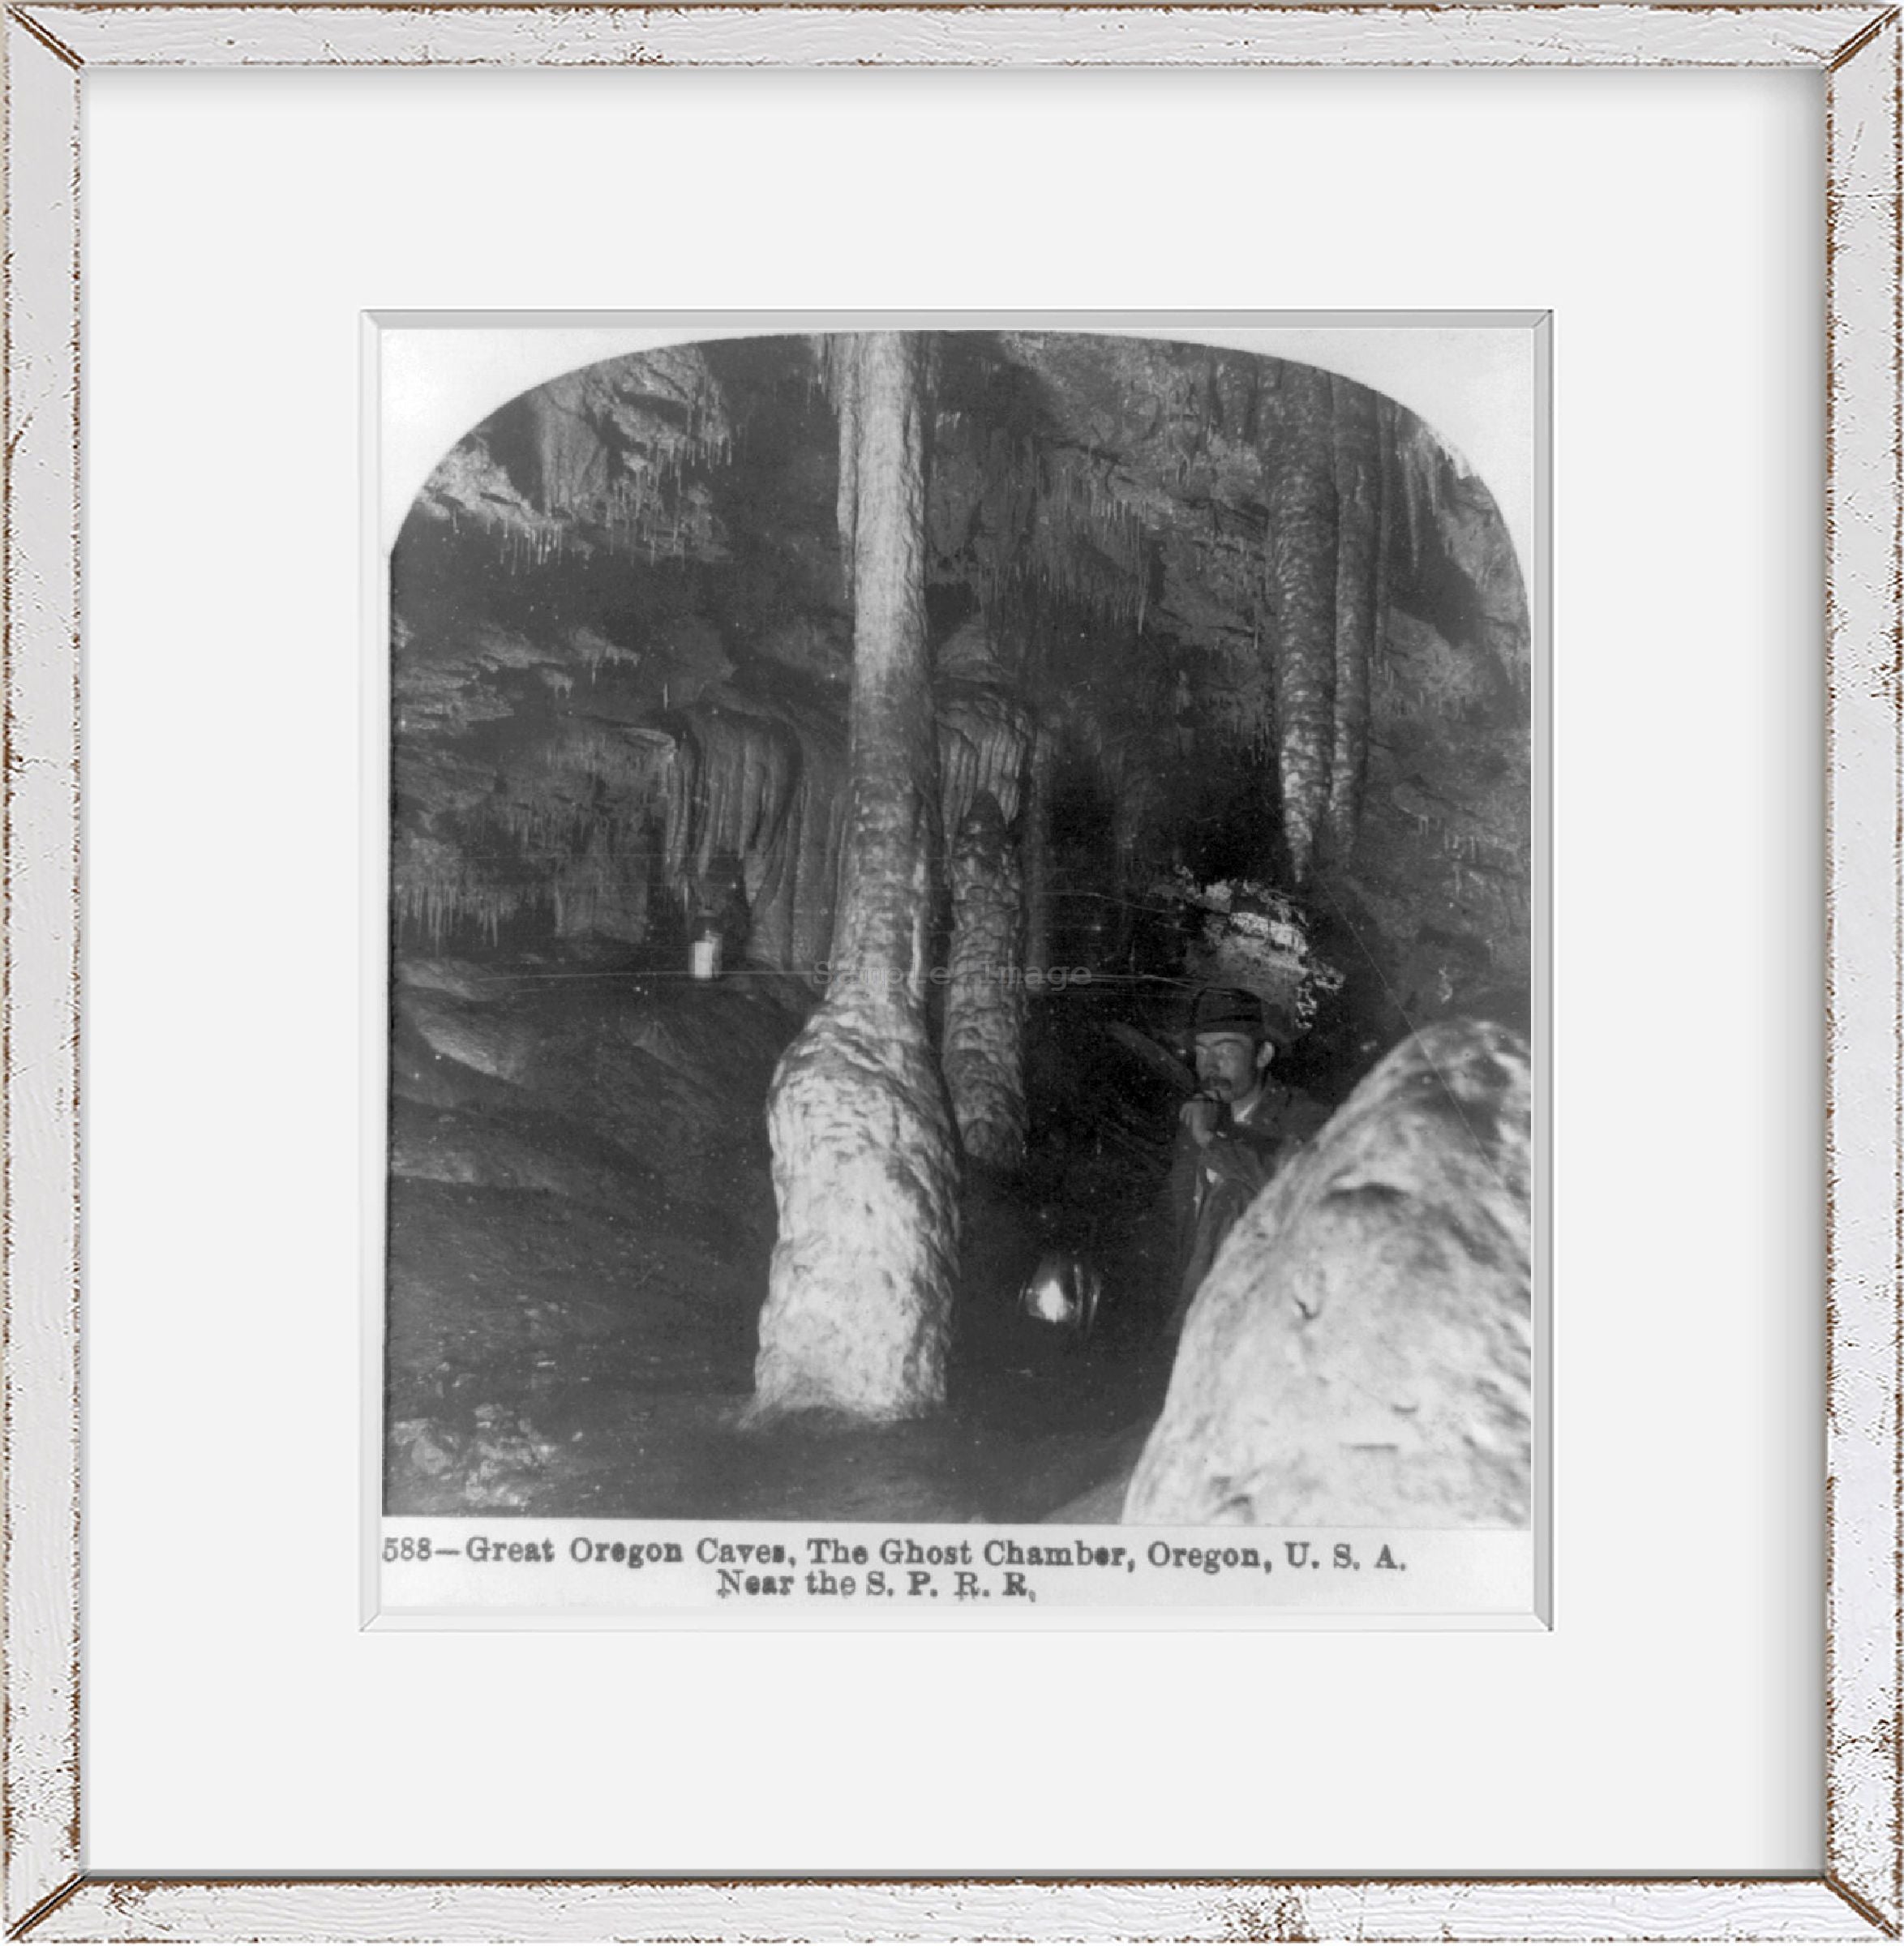 Photo: Great Oregon Caves, Ghost Chamber, OR, Man, Lantern, Stalagmites, Stalagtites, c